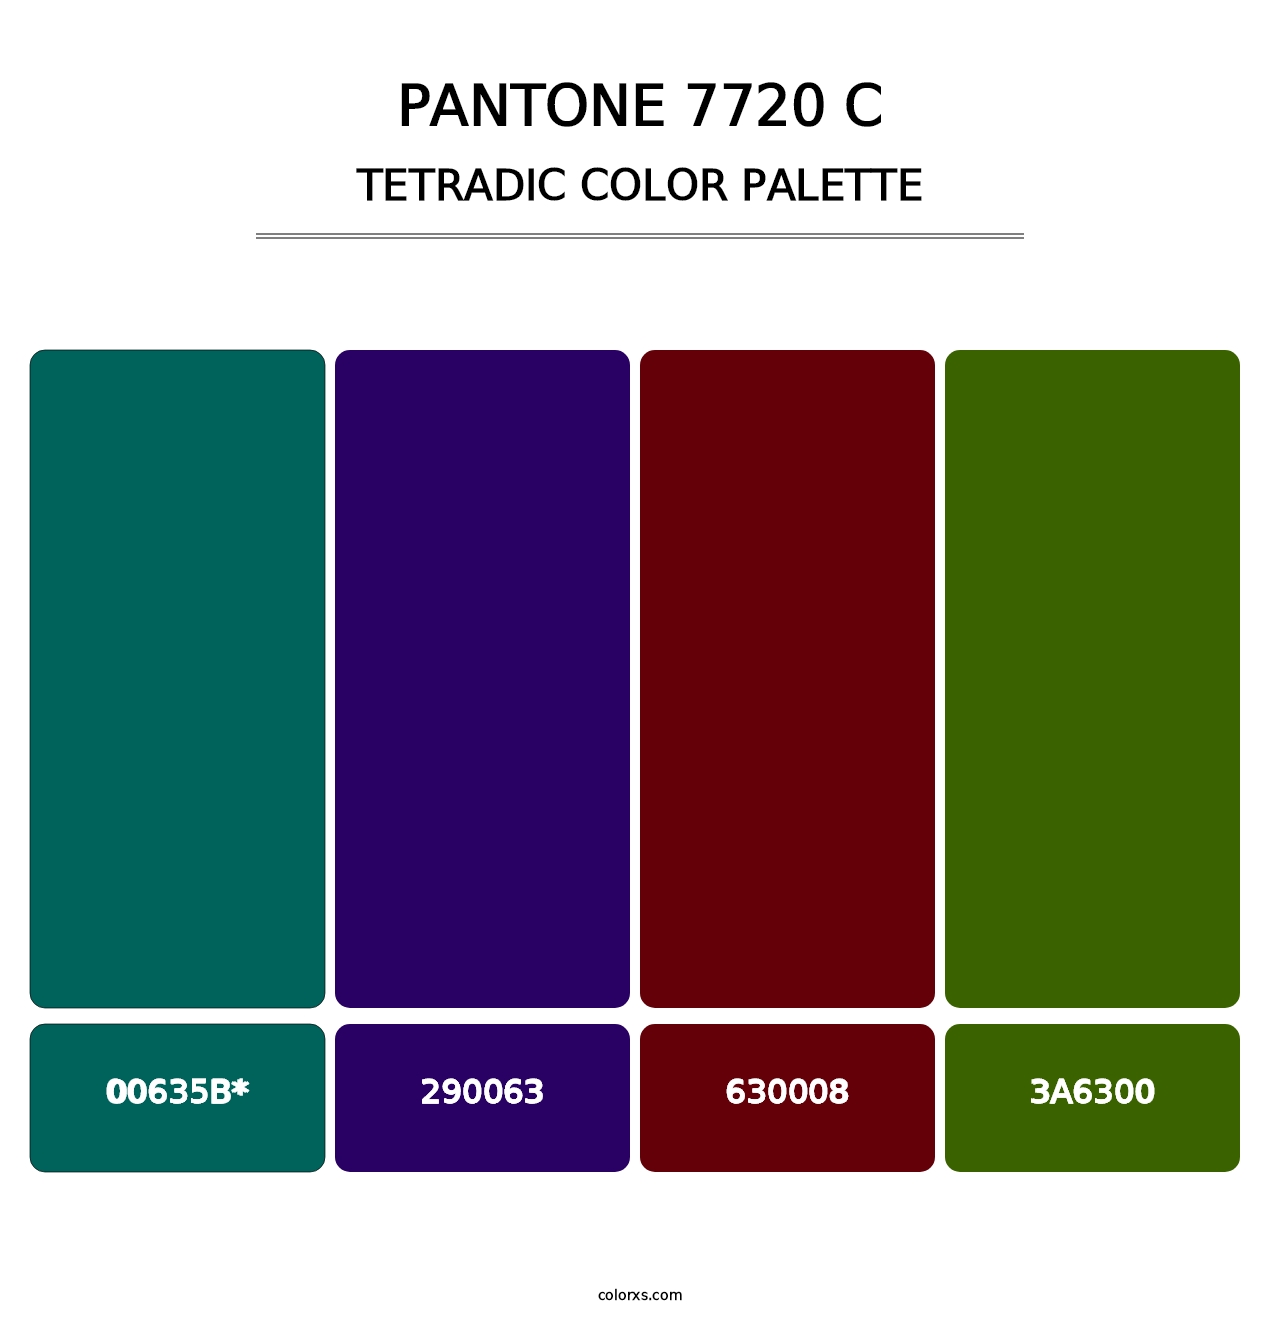 PANTONE 7720 C - Tetradic Color Palette